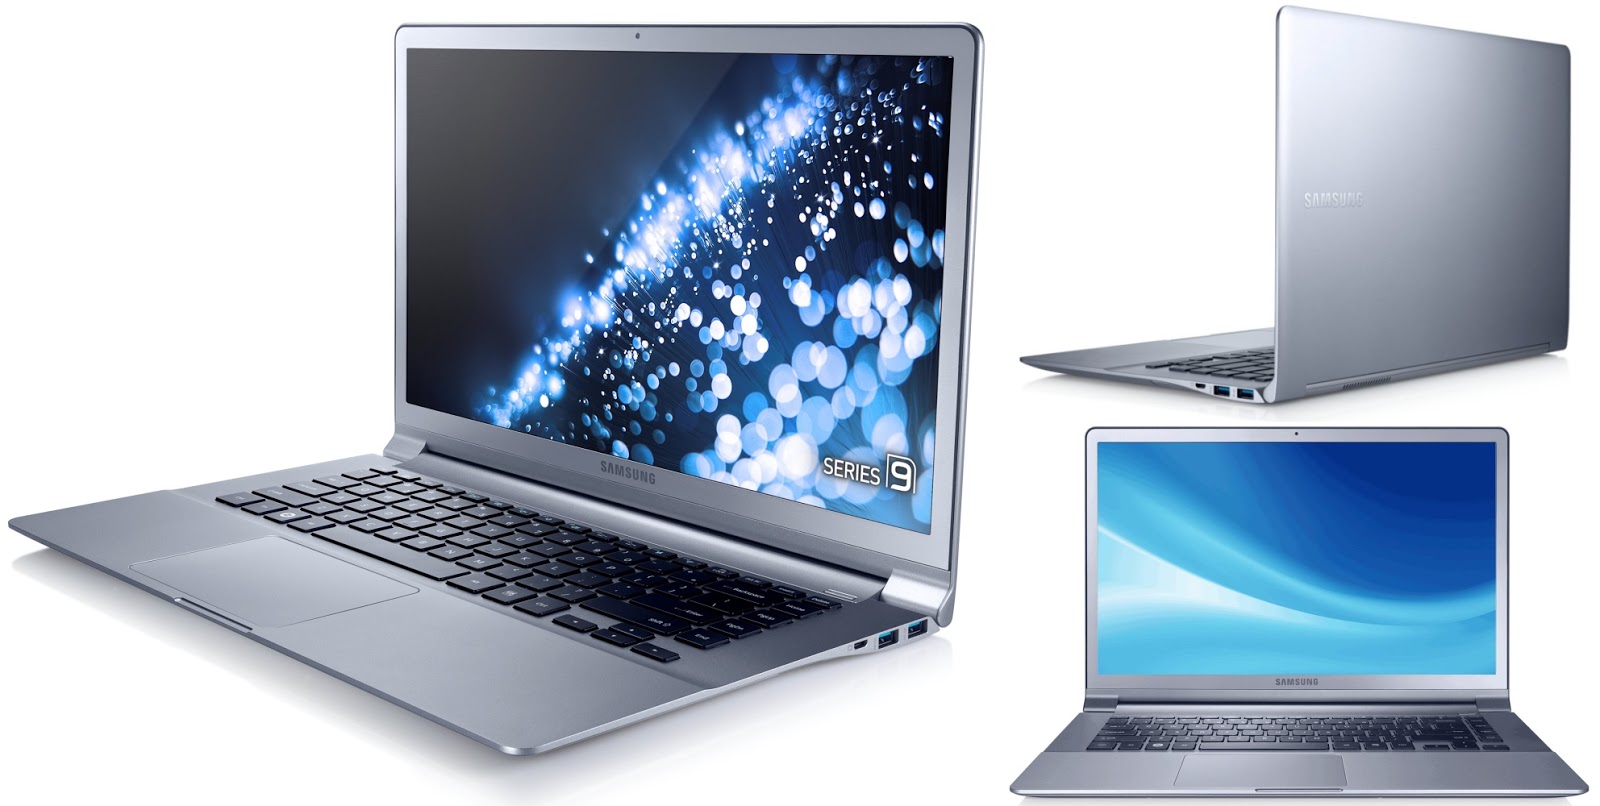 Samsung 9 series. Samsung x900 Ultrabook. Ультрабук Samsung 900x3c. Samsung Series 9 ноутбук np900x3c. Ультратонкий ноутбук Samsung 900x.